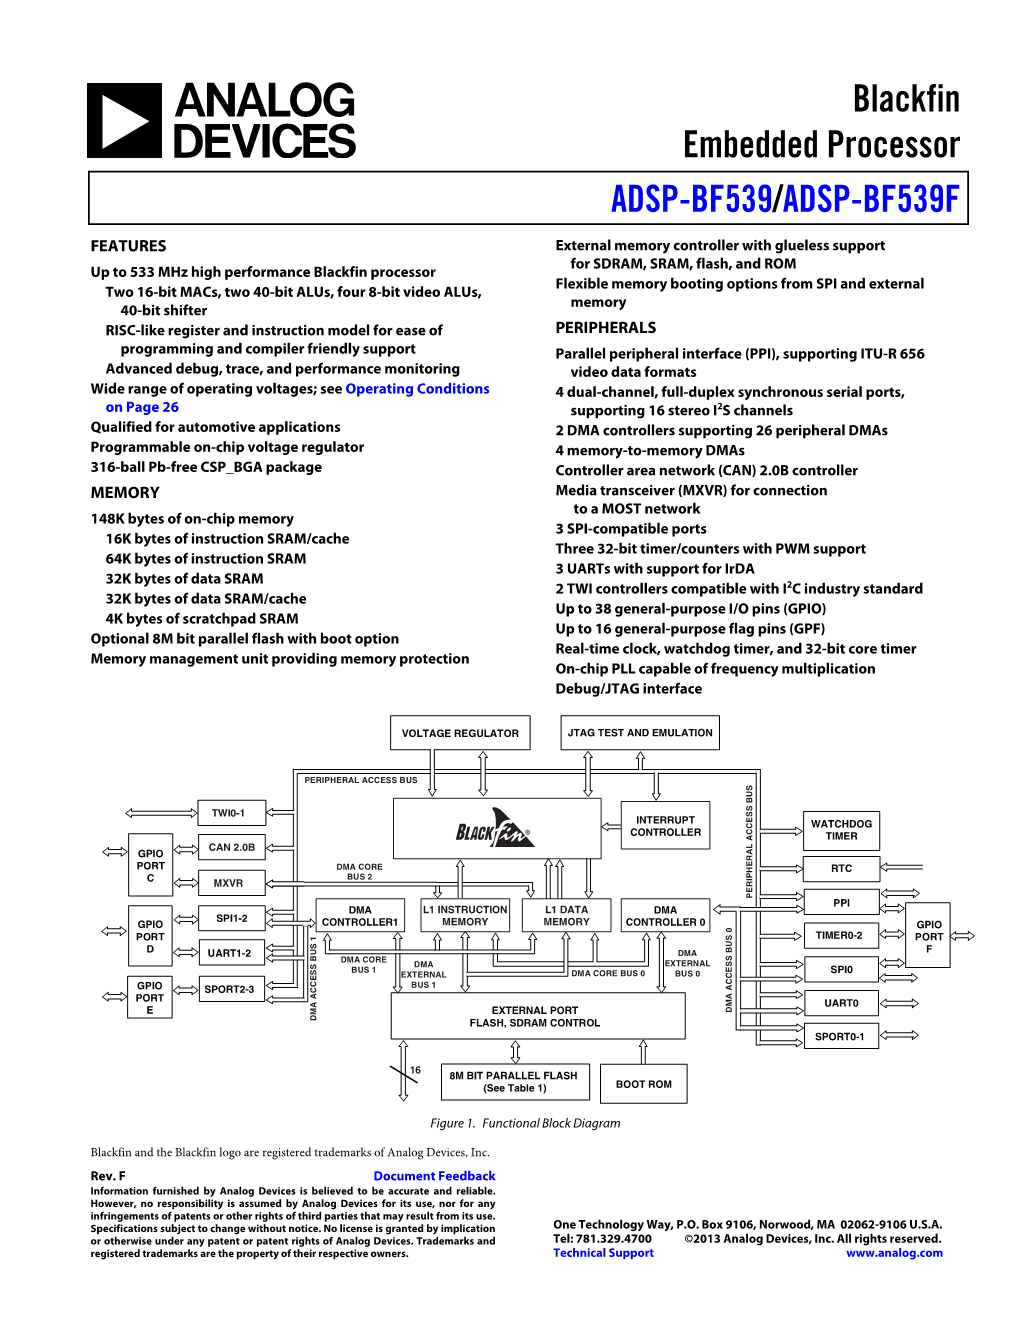 ADSP-BF539/ADSP-BF539F Blackfin Embedded Processor Data Sheet, Rev. F